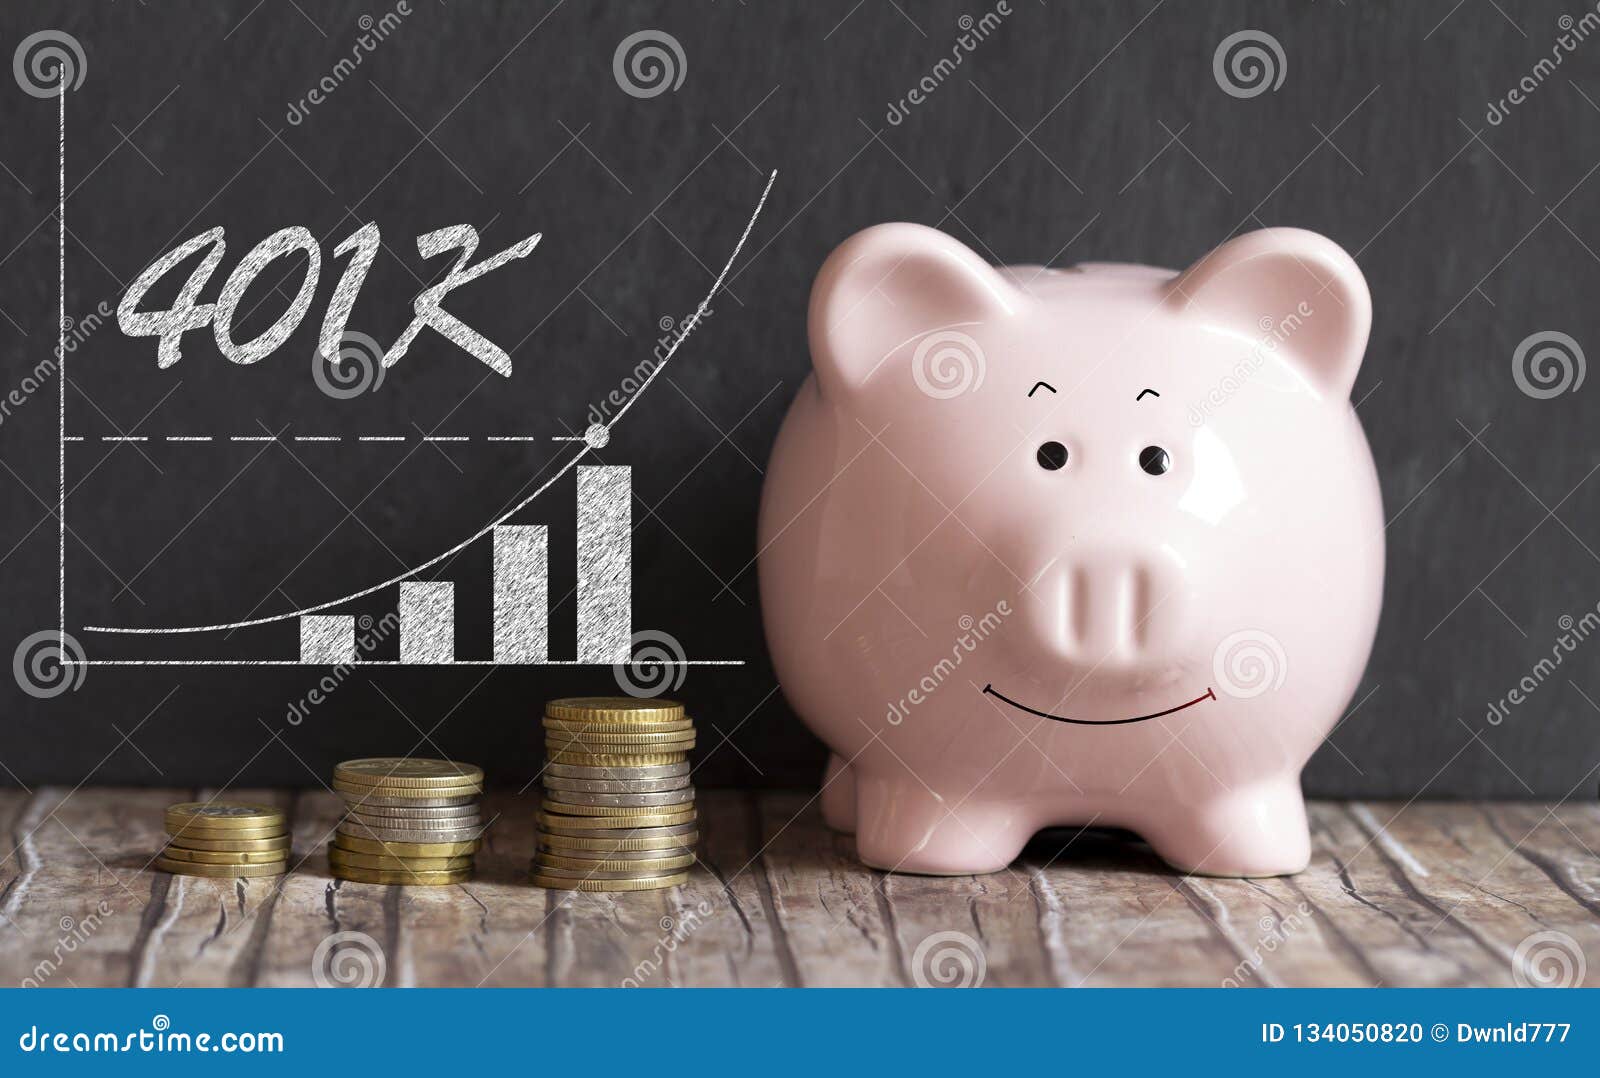 401k piggy bank concept